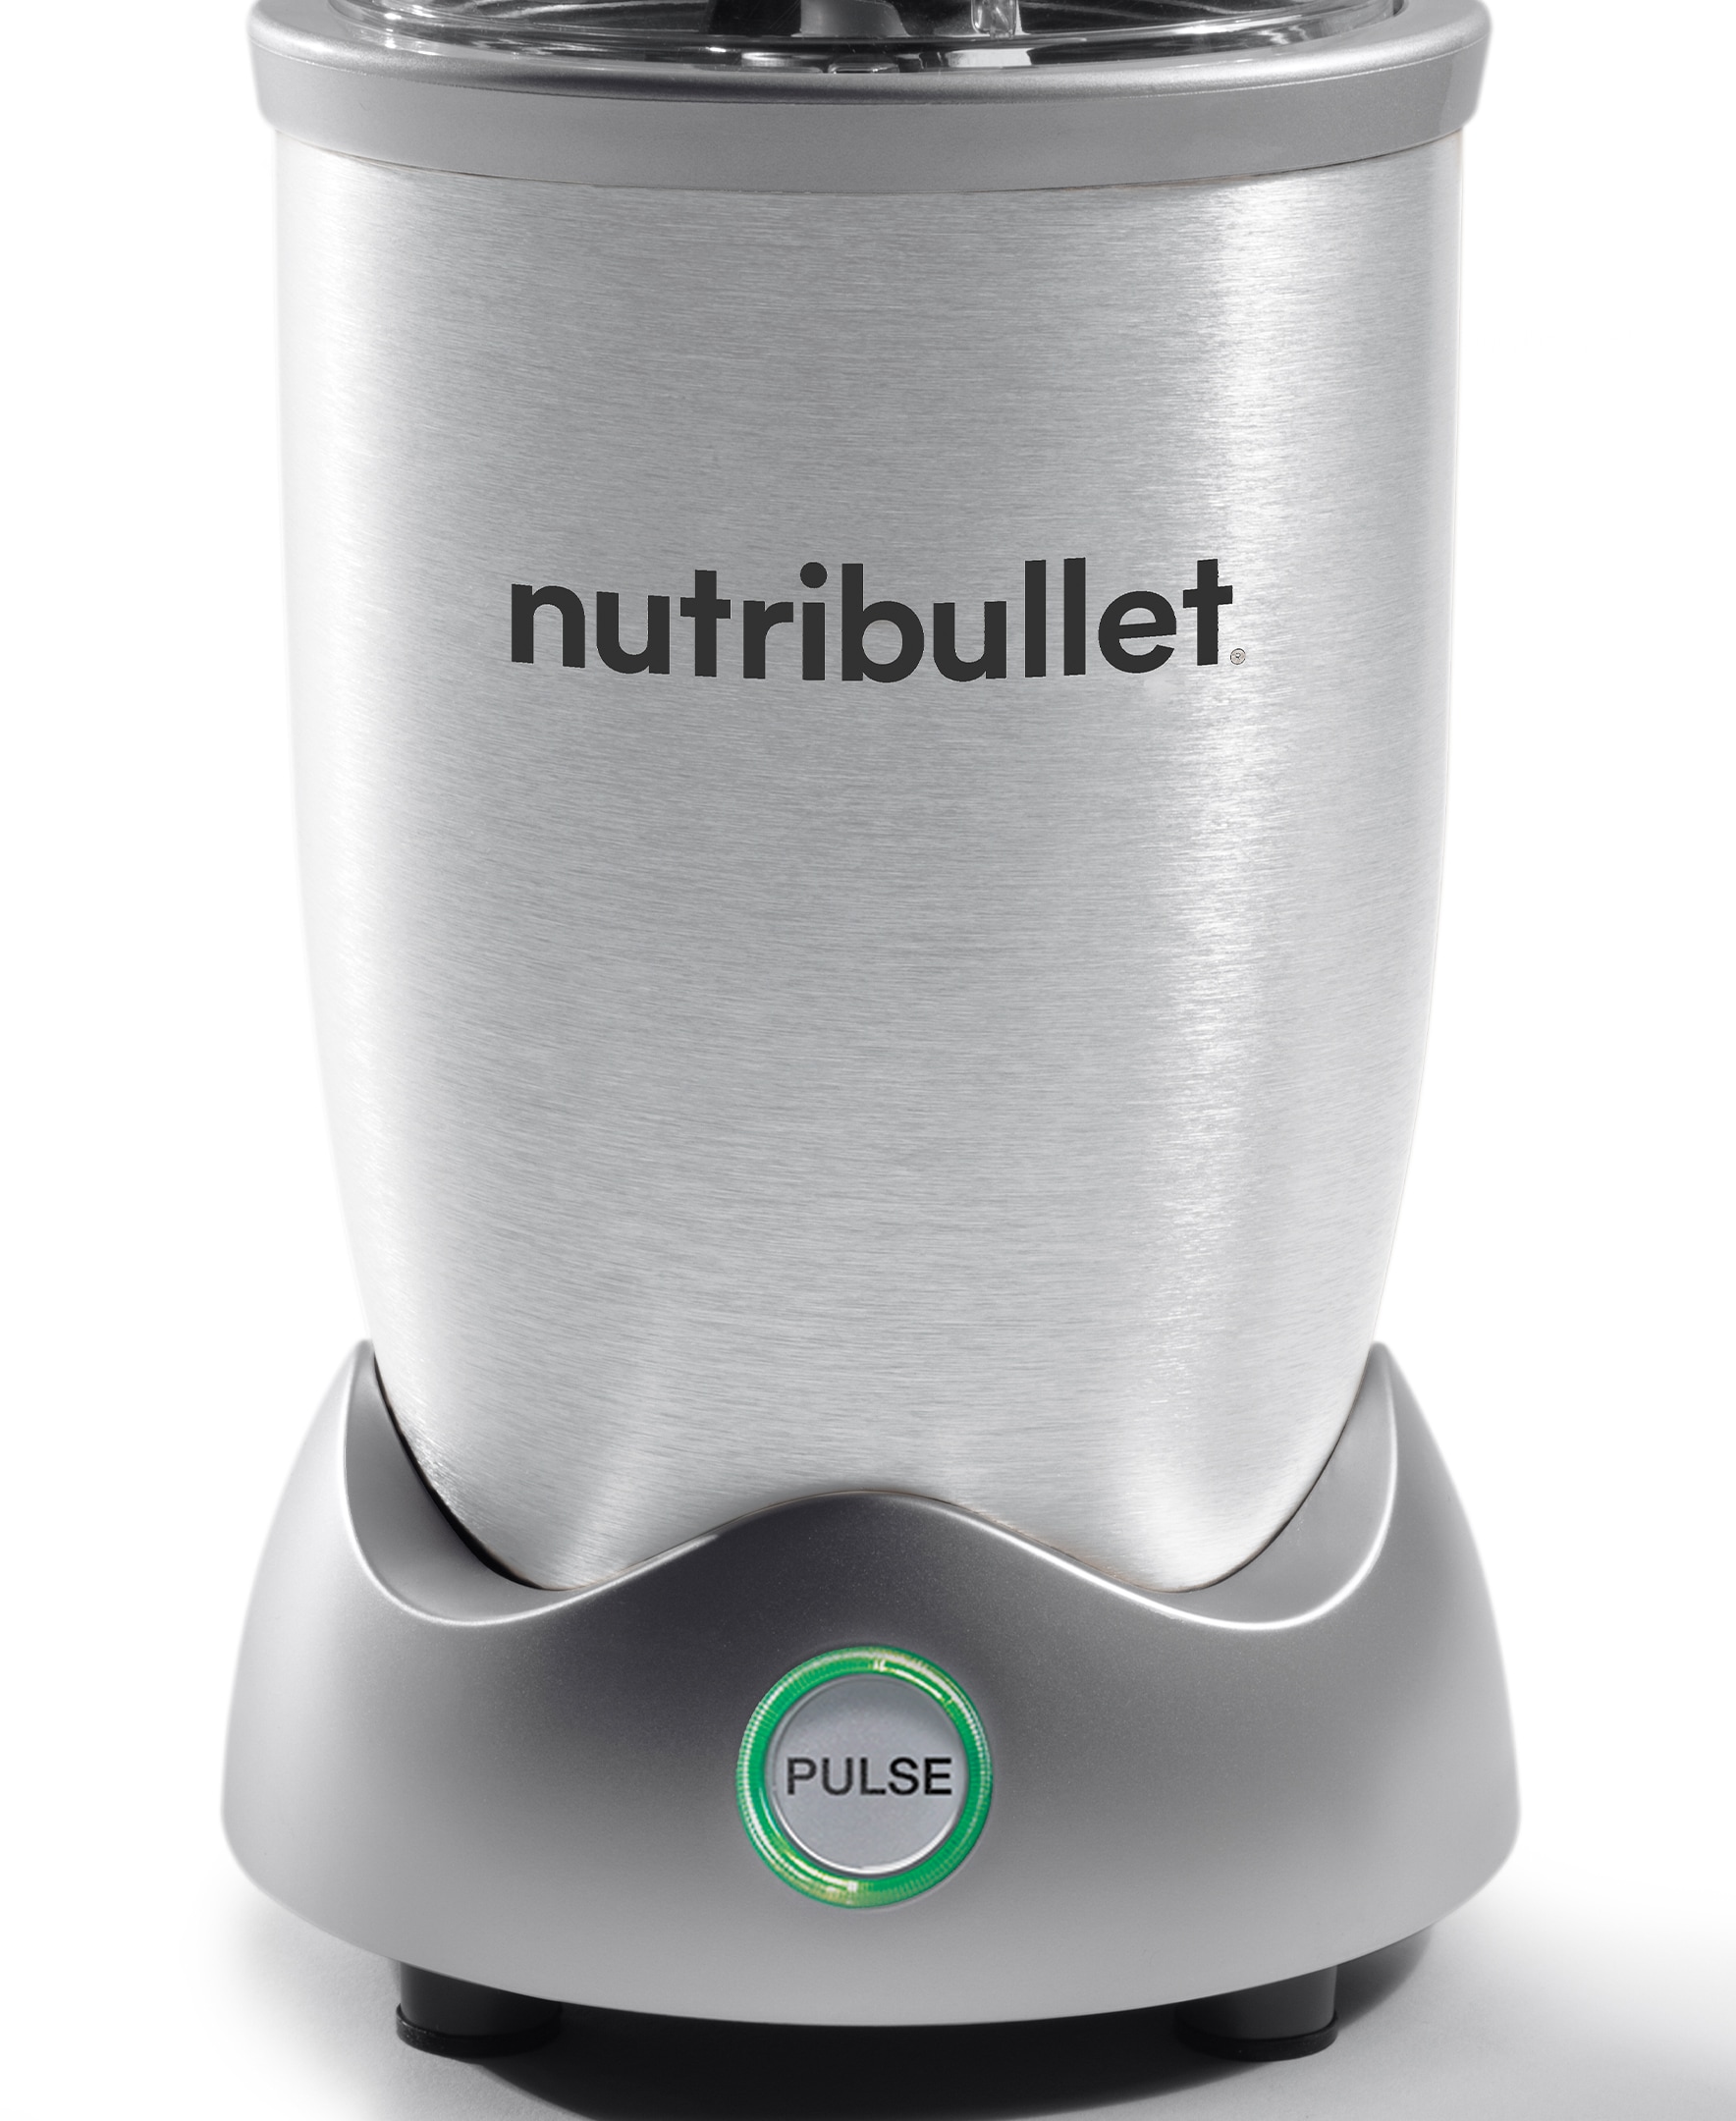 nutribullet N12-1001 Pro Plus Pro Plus Blender with 1200W Instructions